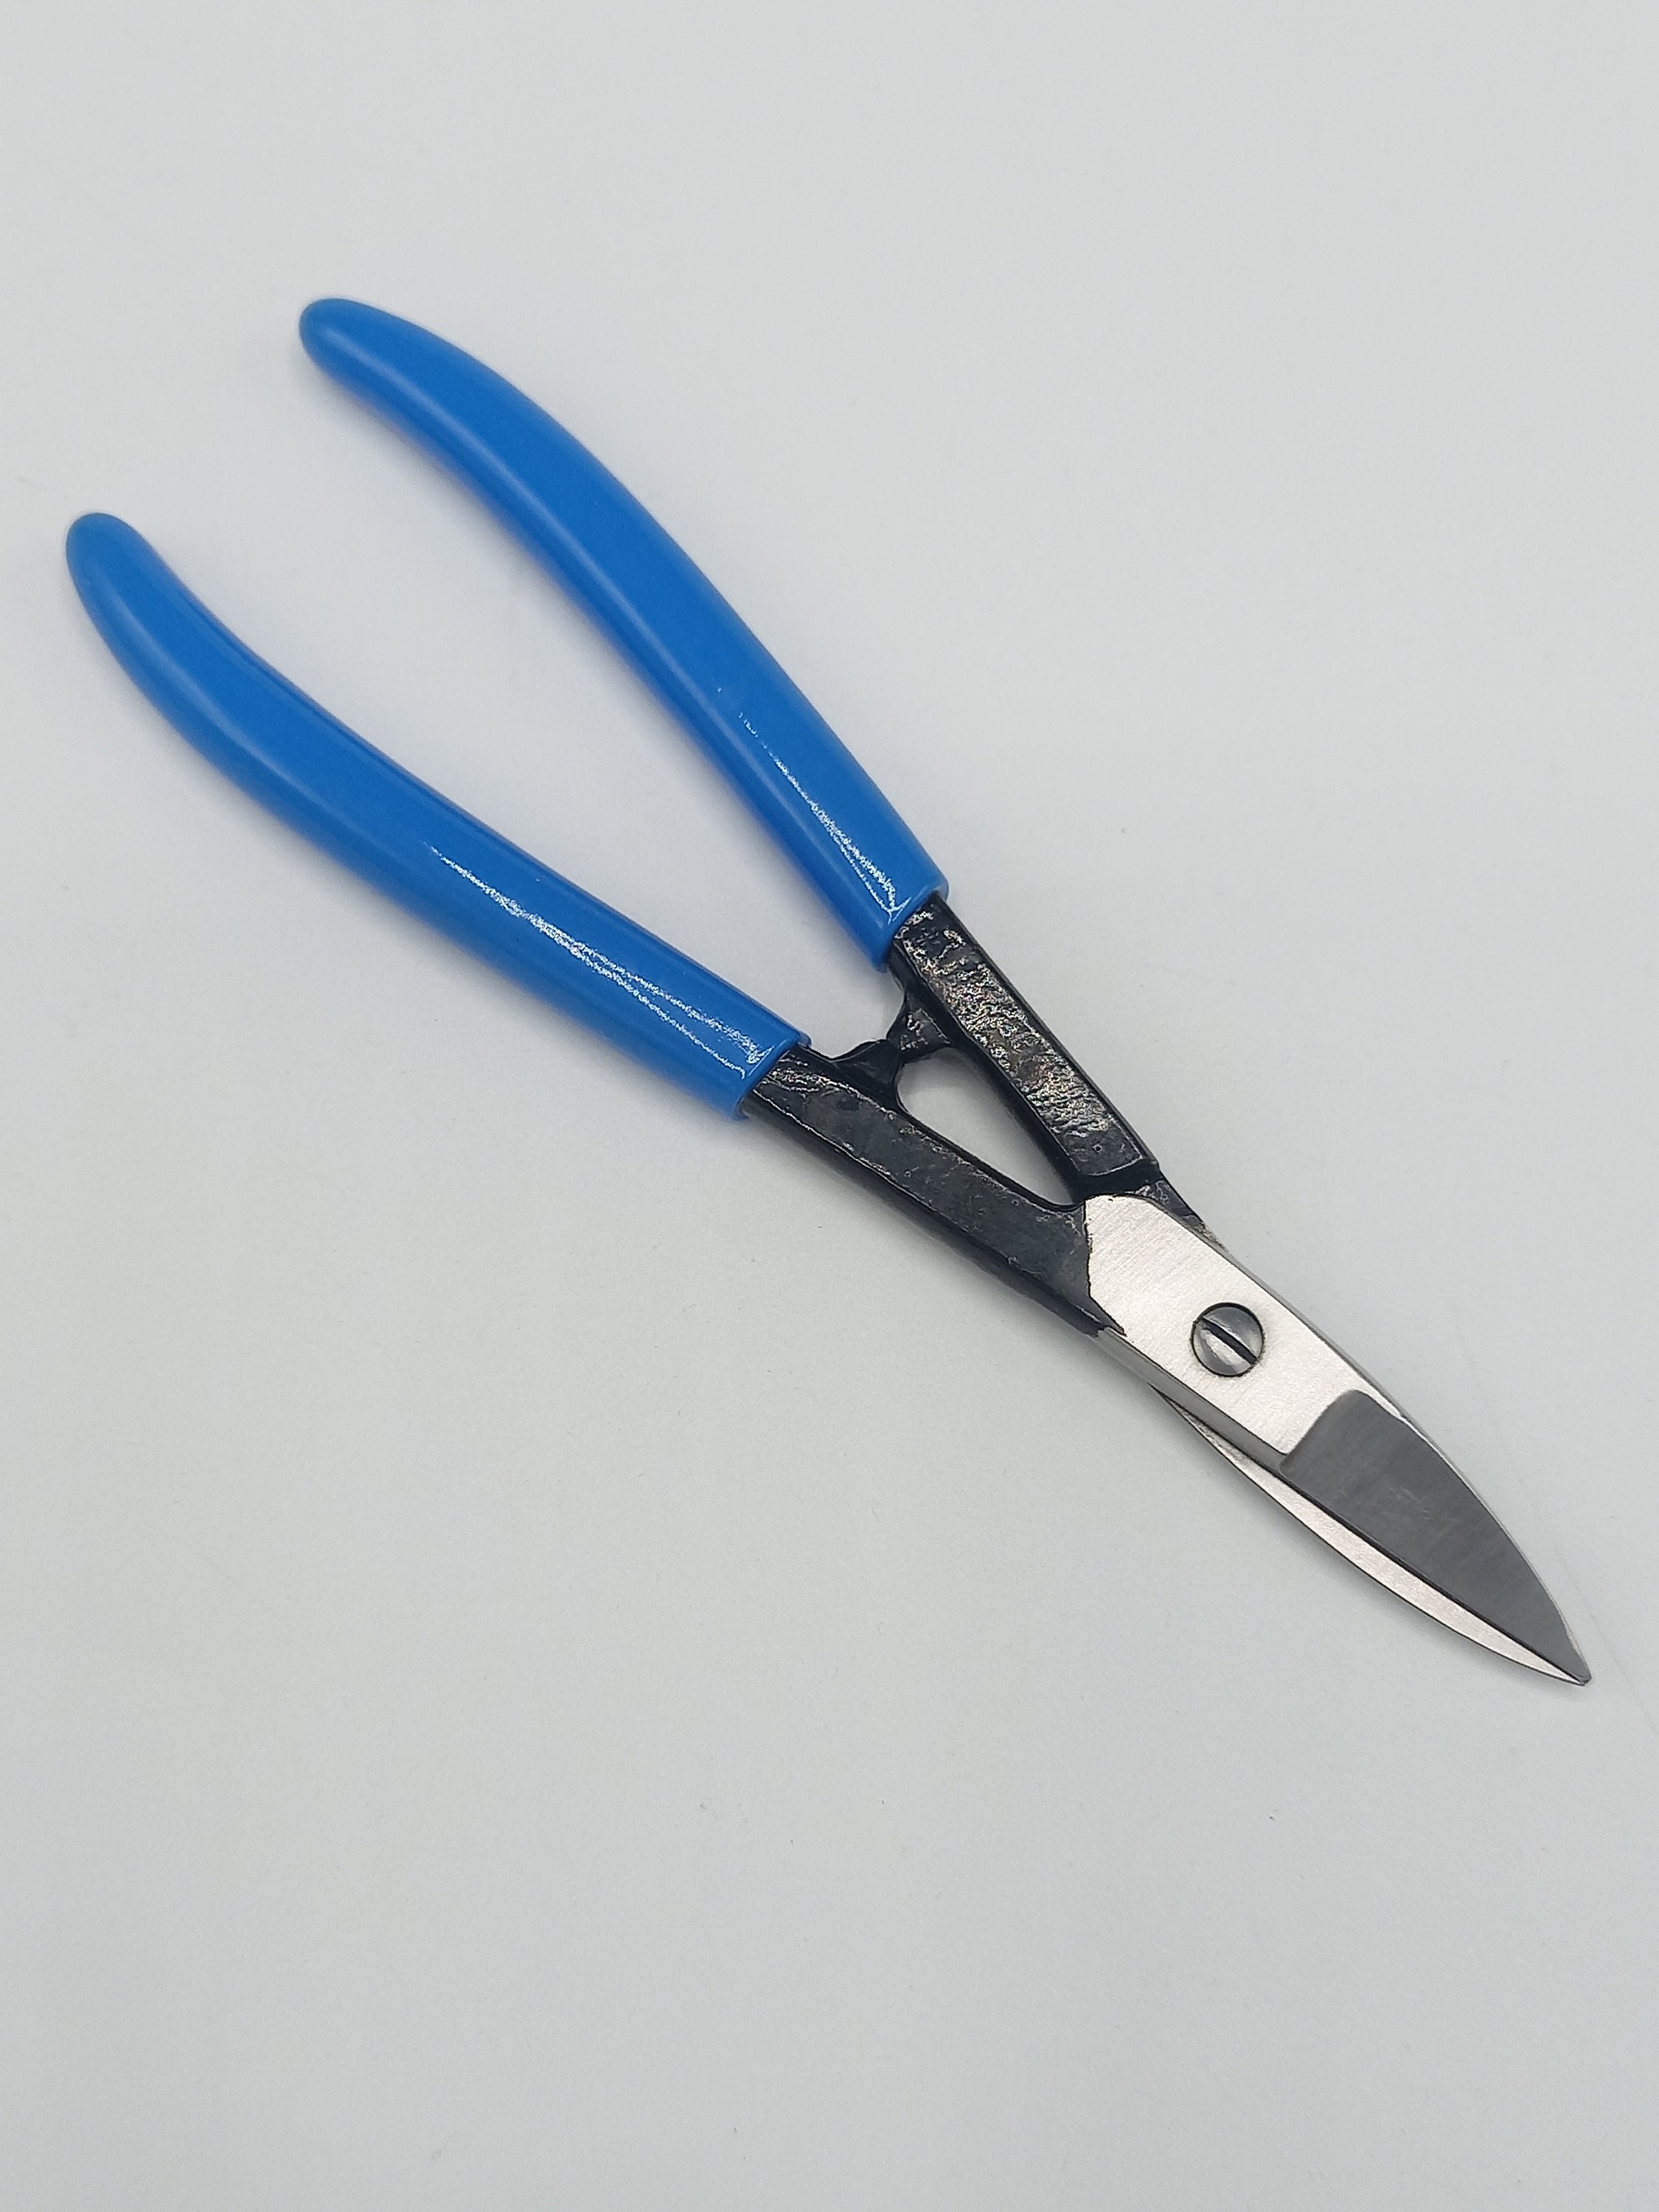 Fiskars 194710 Take Apart Scissor Precision Guard Stainless Steel Serrated  Blade